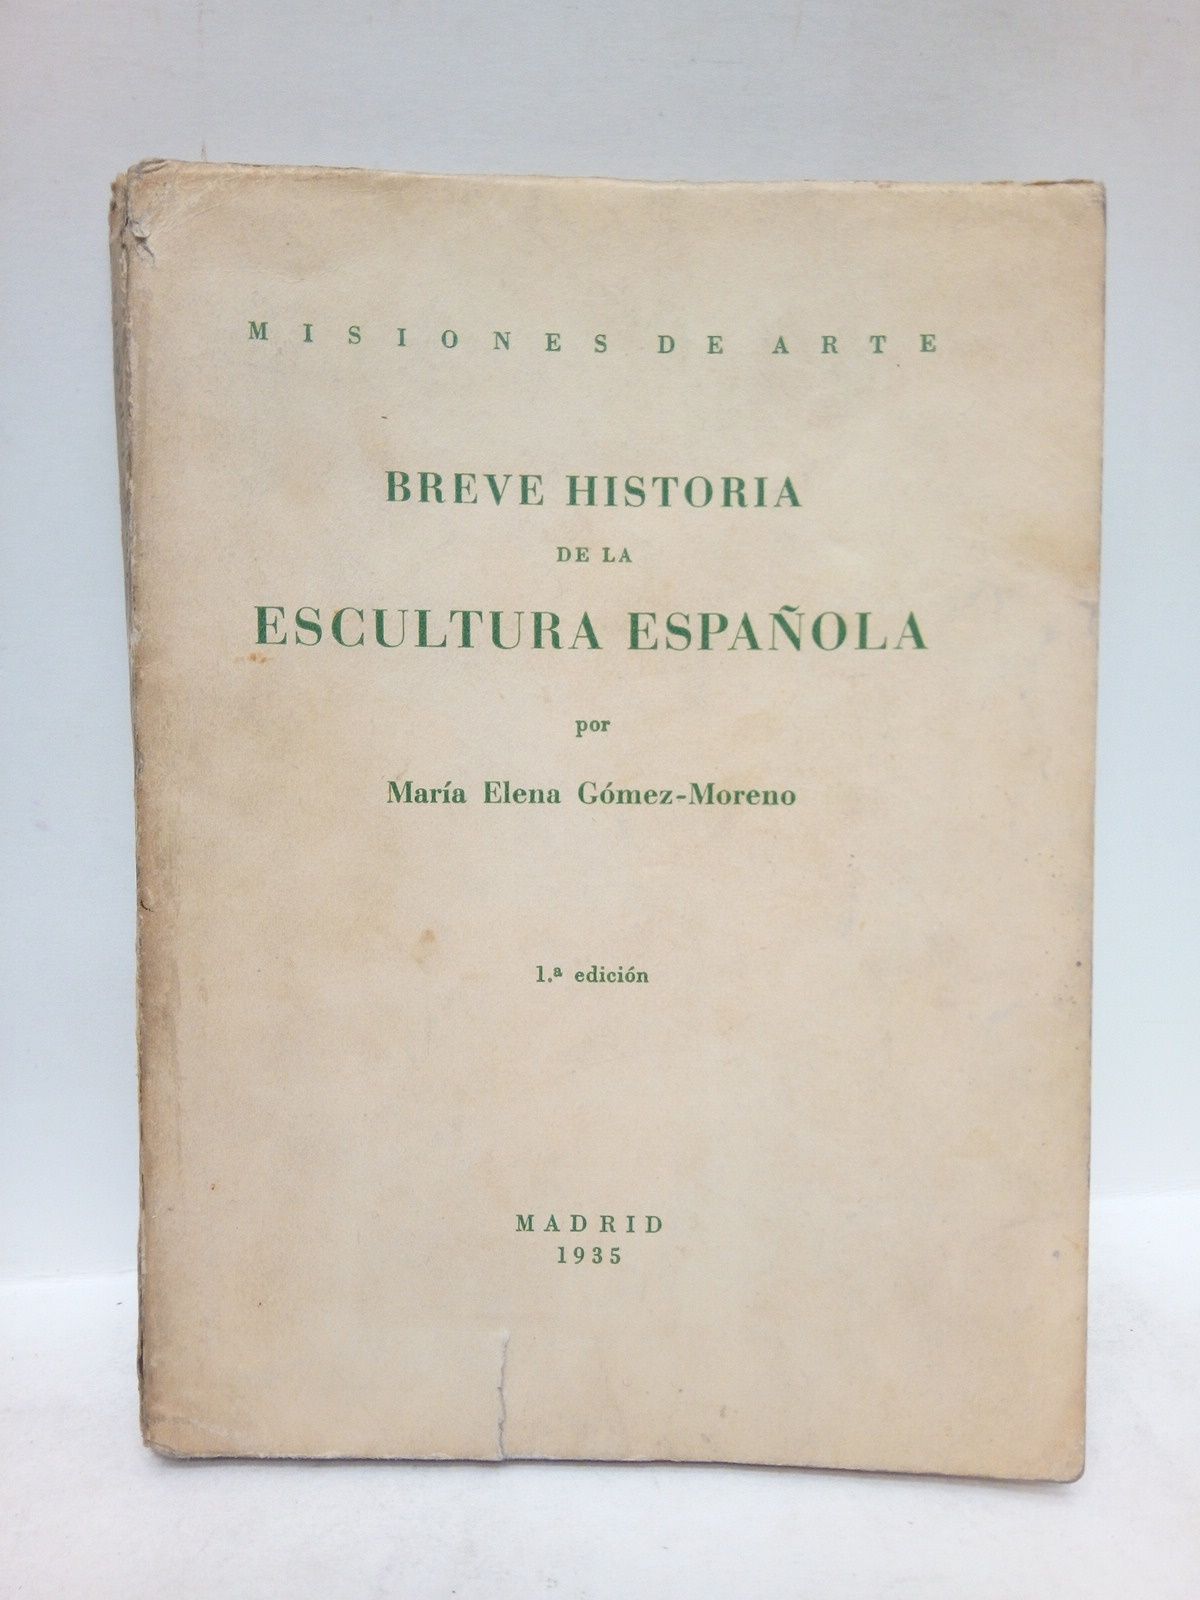 GOMEZ-MORENO, Mara Elena - Breve Historia de la Escultura Espaola